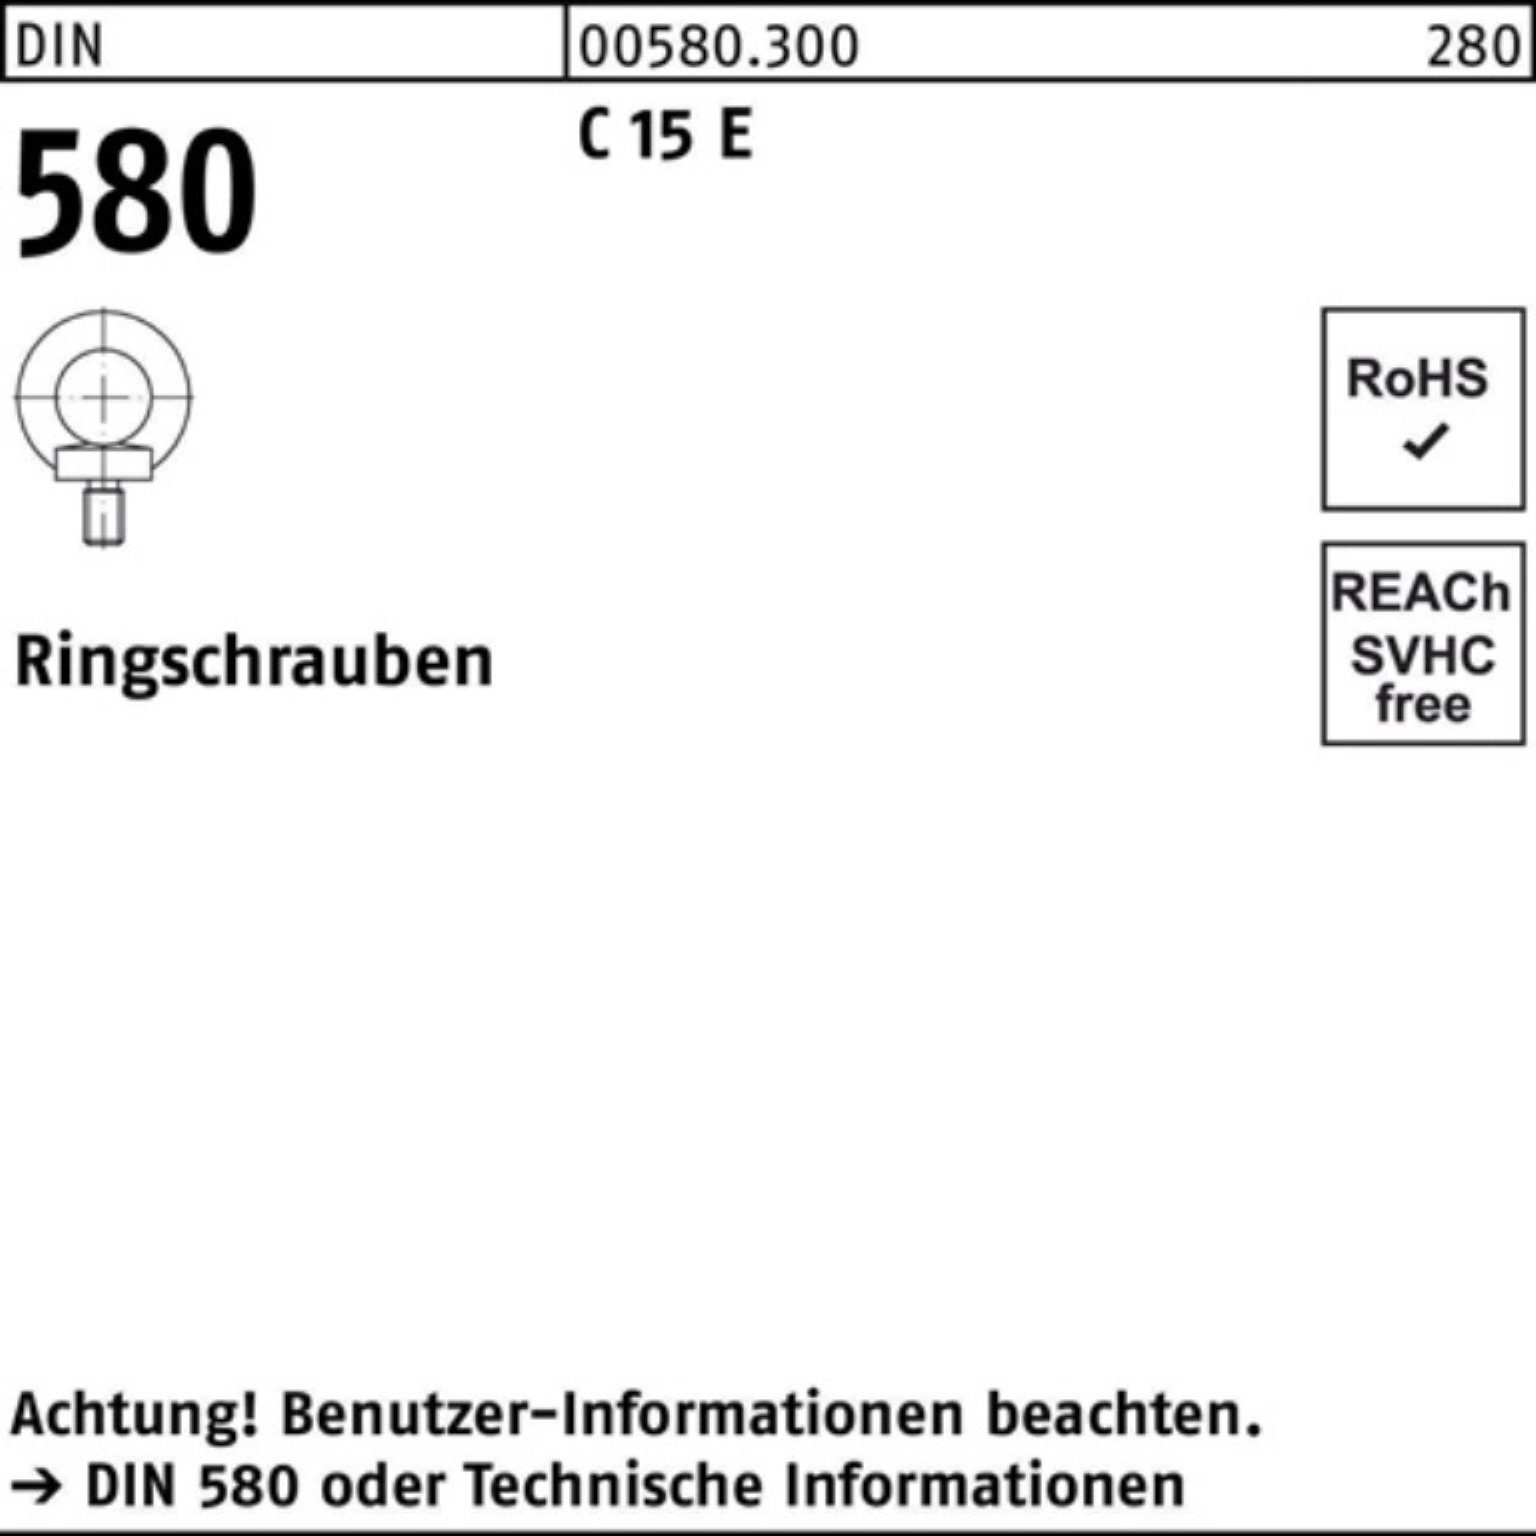 Reyher Schraube 100er Pack Ringschraube DIN 580 M27 C 15 E 1 Stück DIN 580 C 15 E Rin